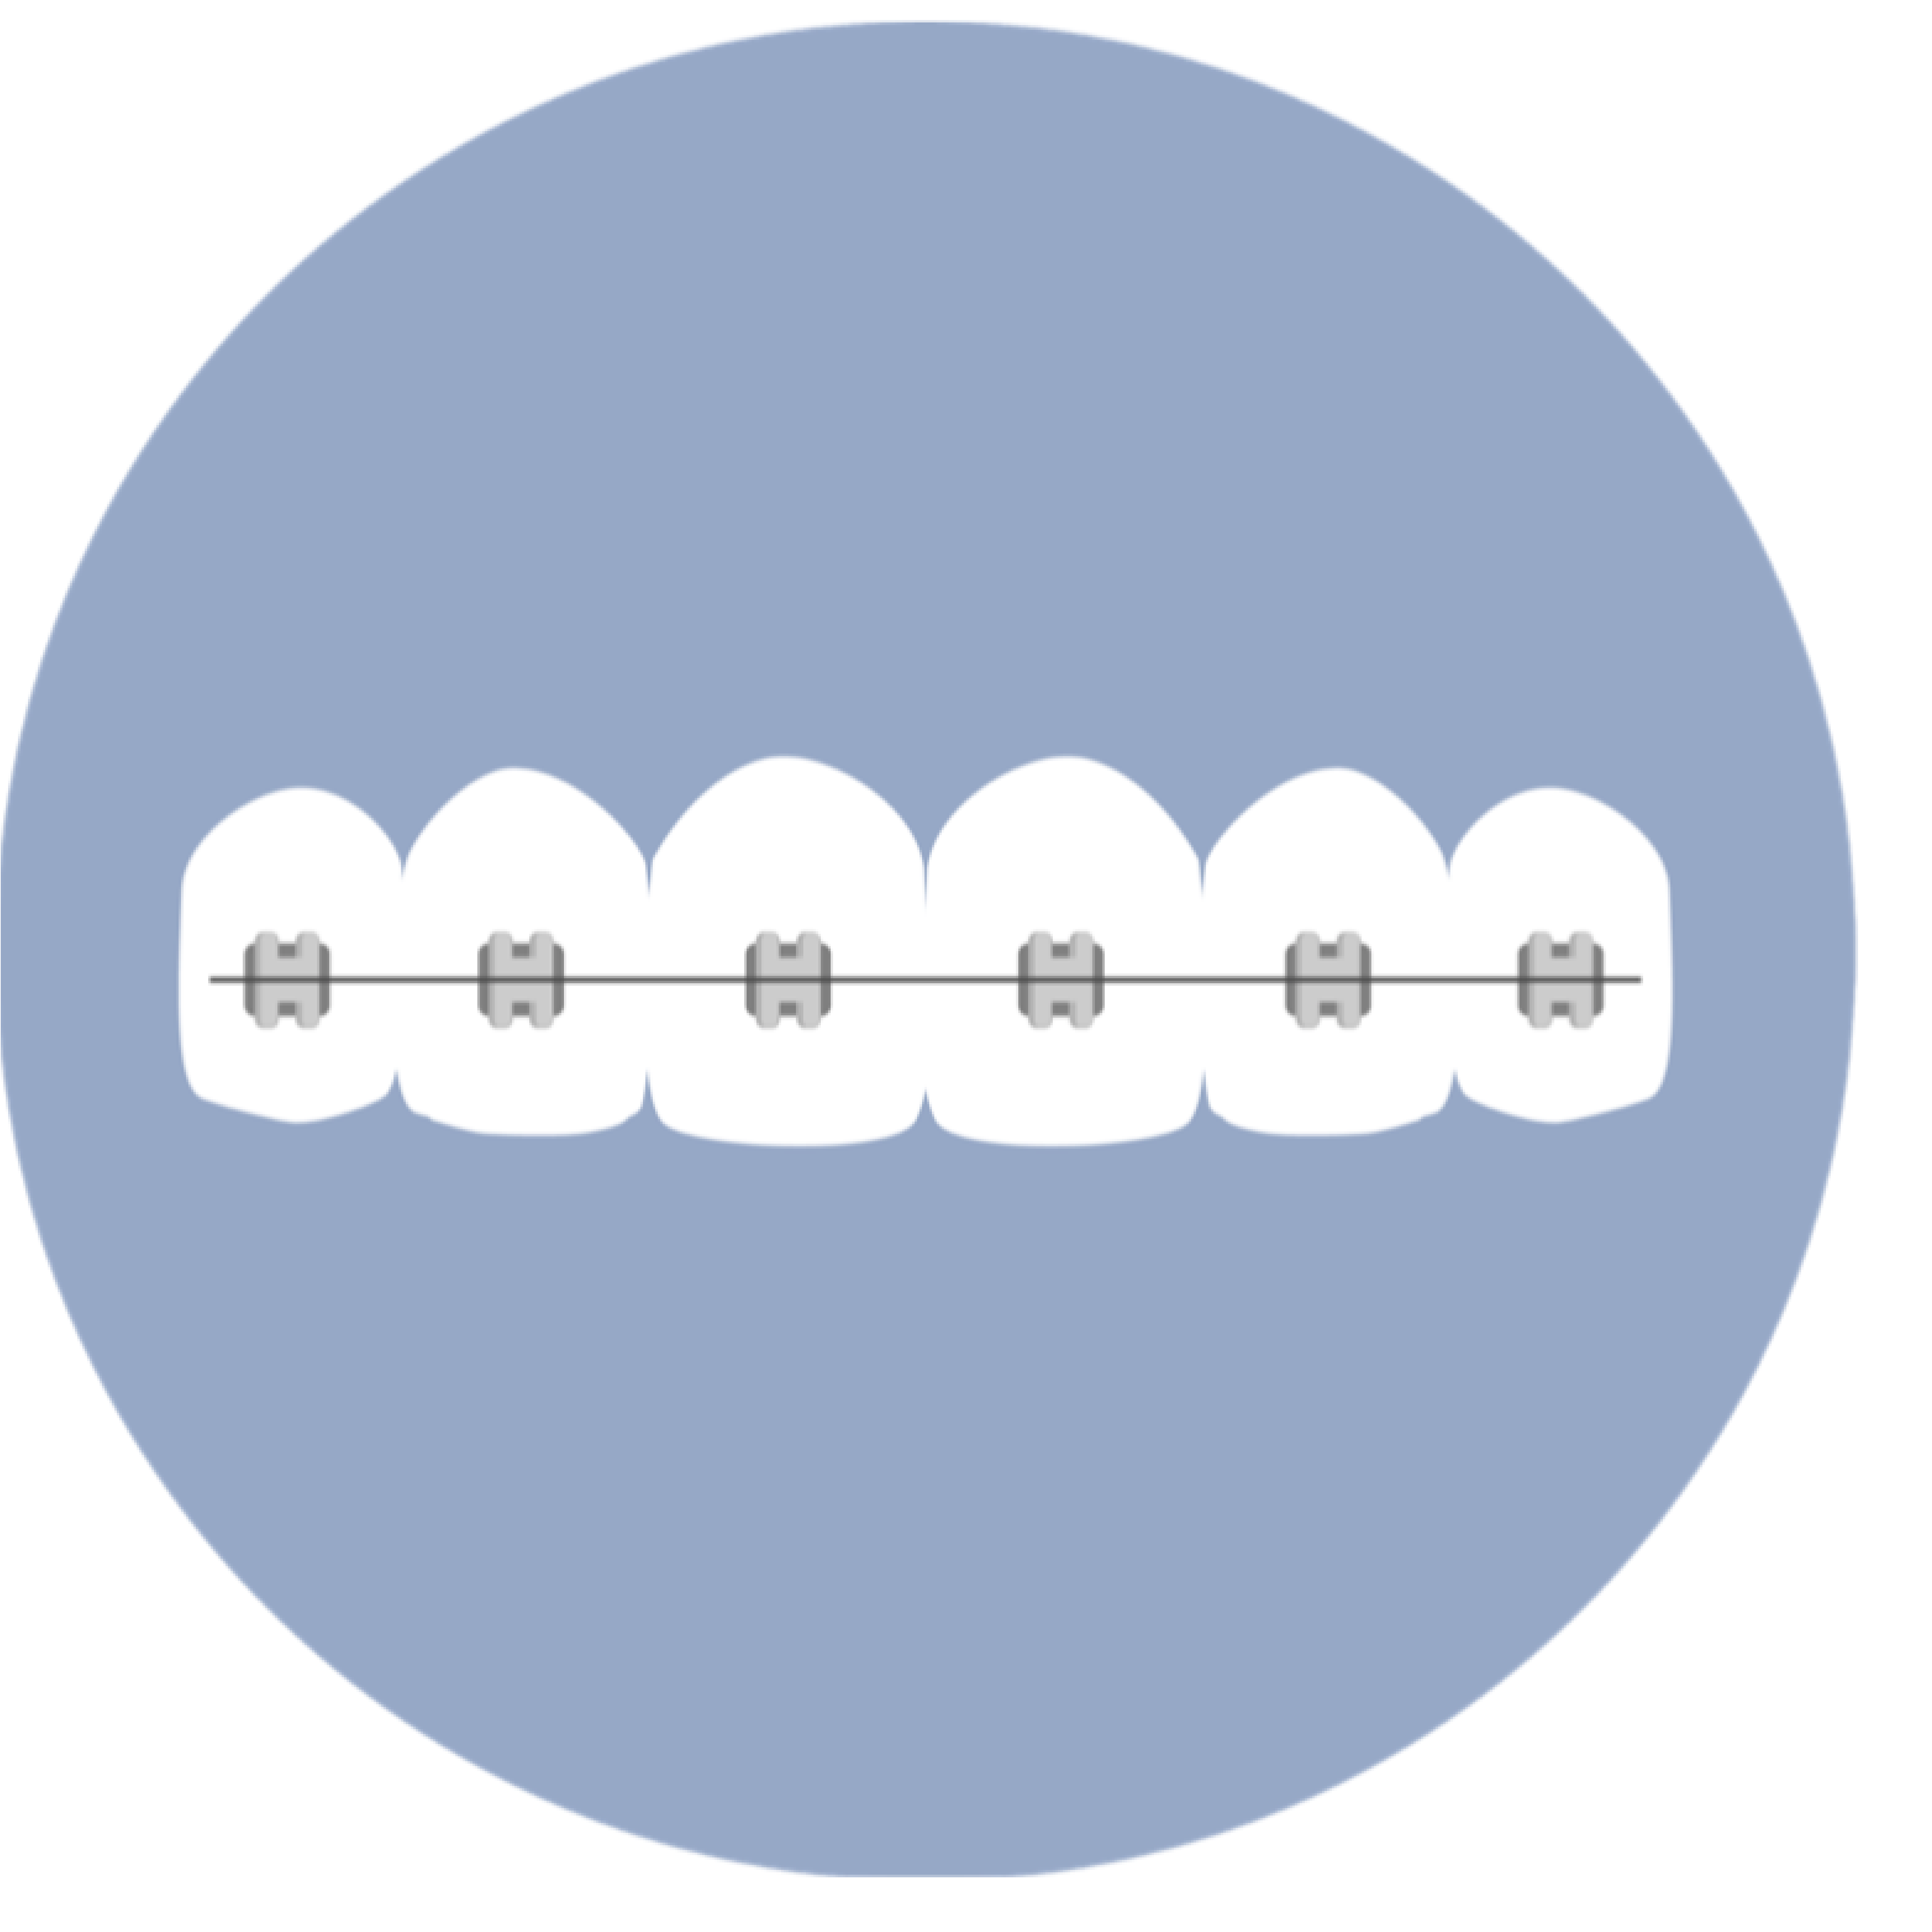 Straight teeth with braces illustration